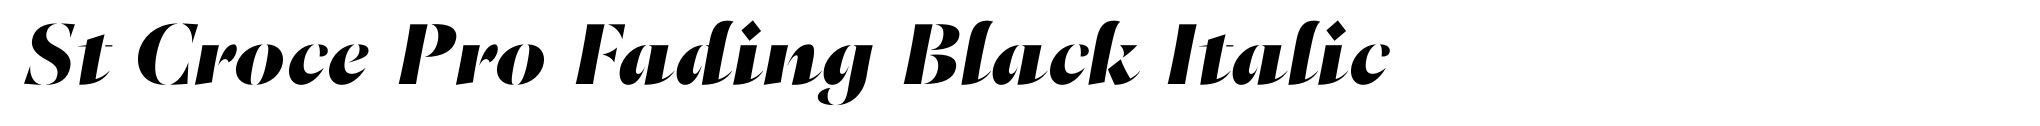 St Croce Pro Fading Black Italic image